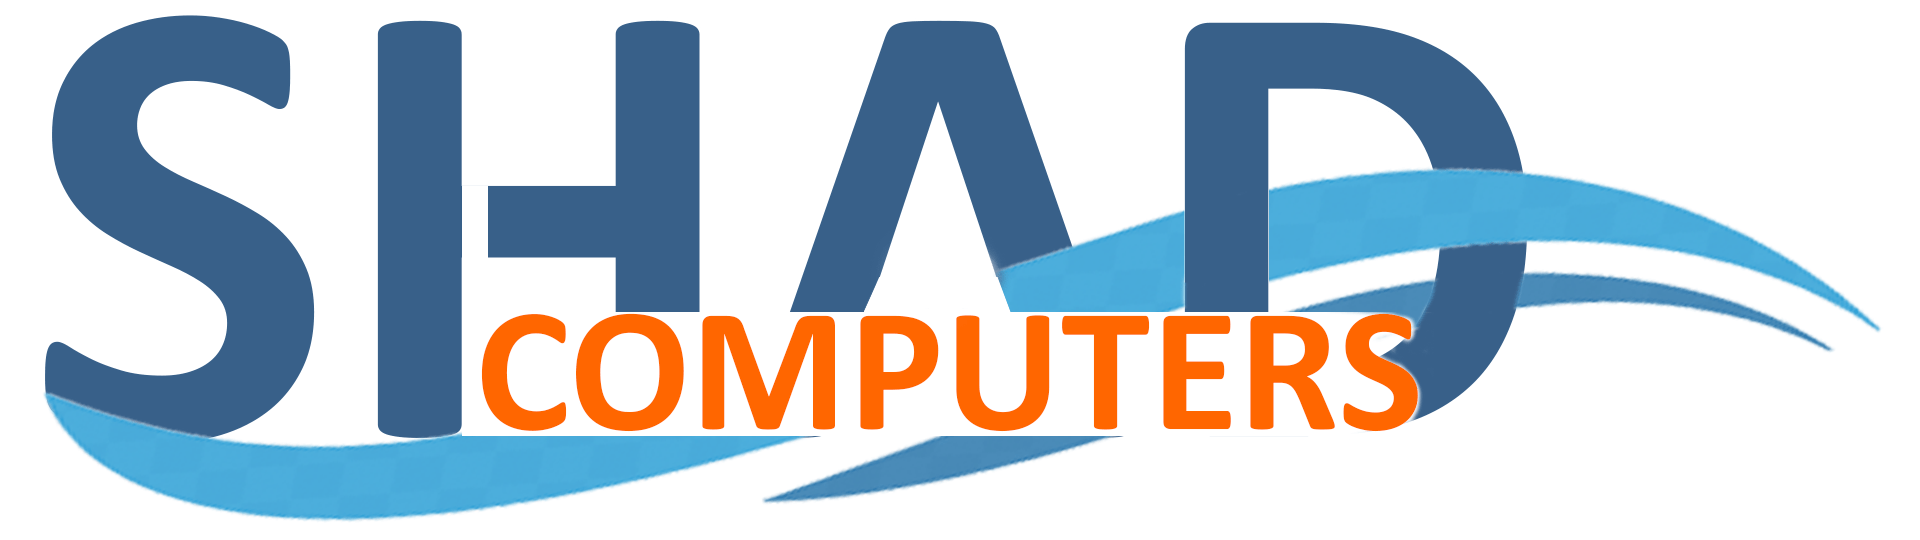 SHAD COMPUTERS